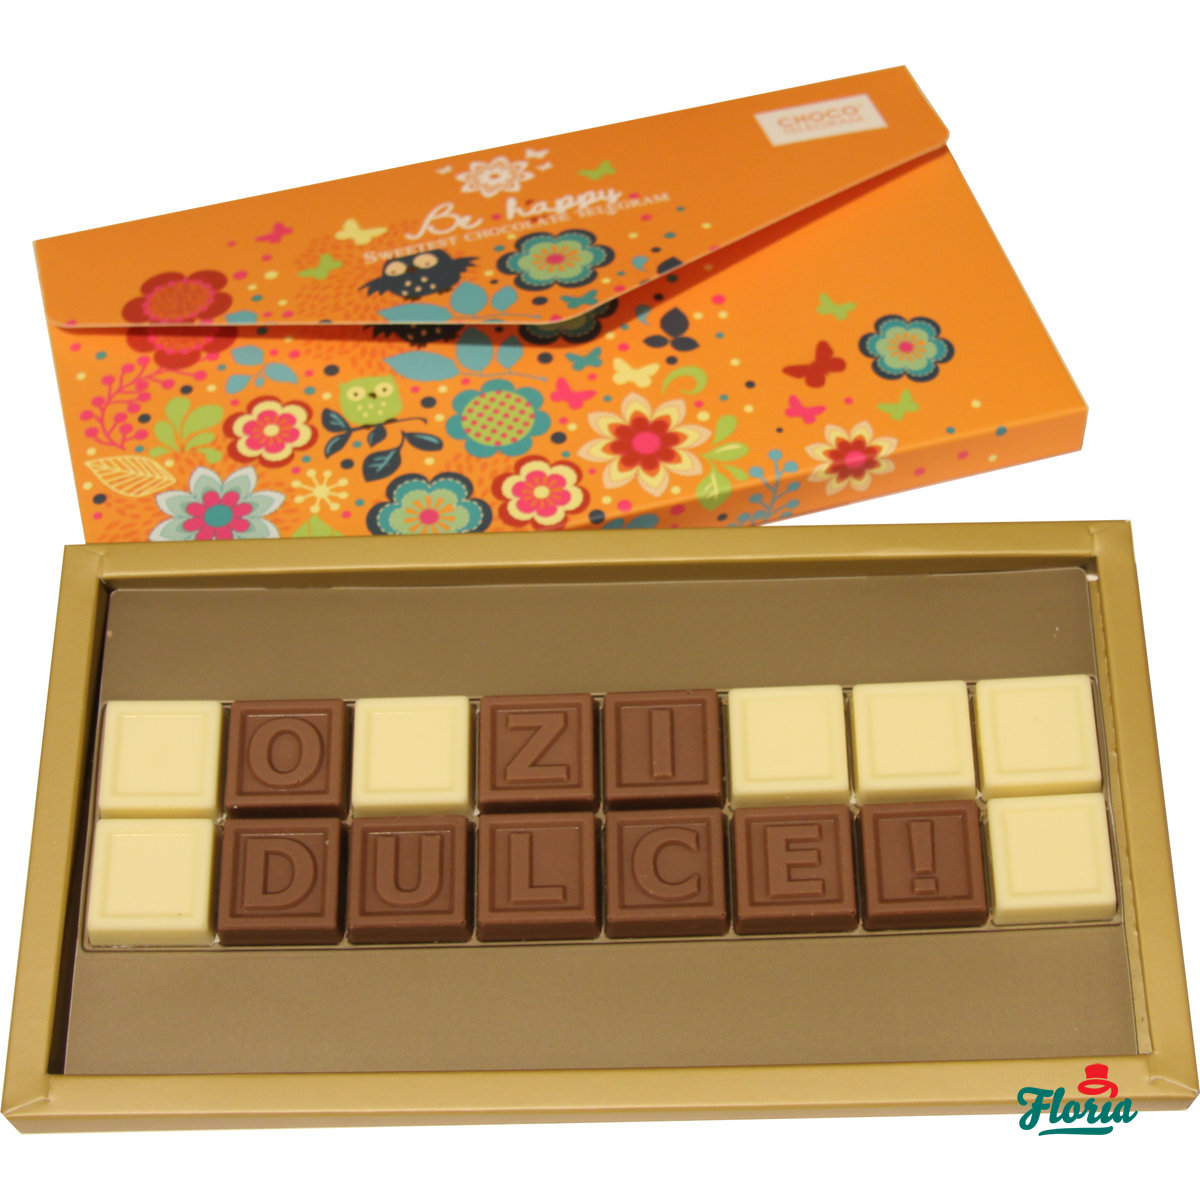 Chocotelegram in cutie plic - Ciocolata personalizata